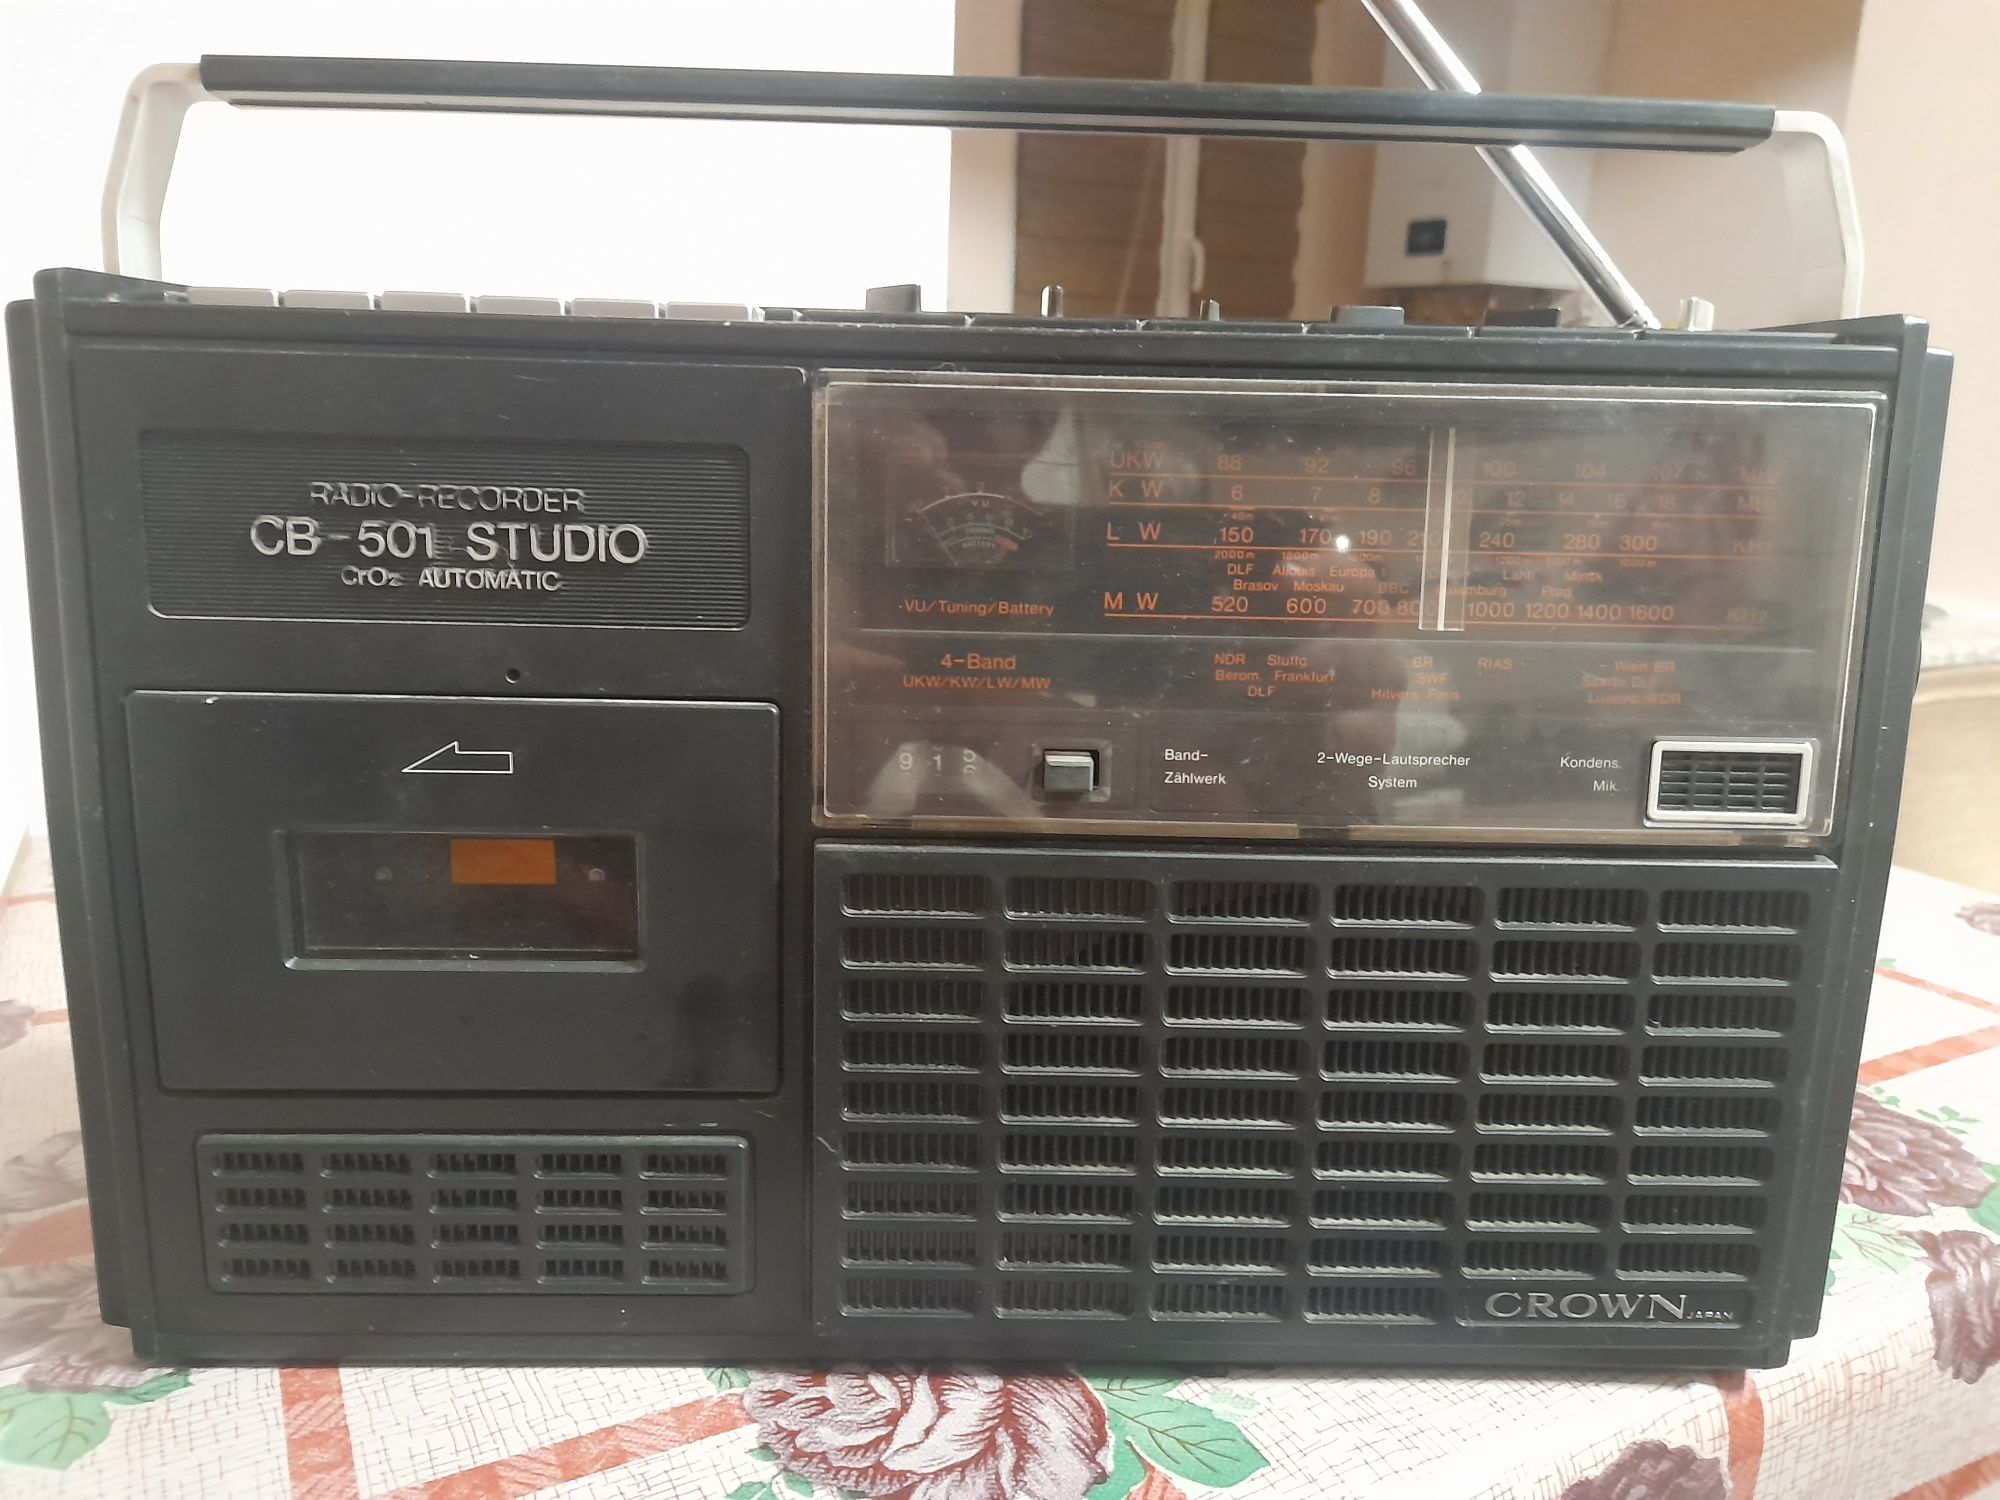 Radio-recorder crown cb-501 studio